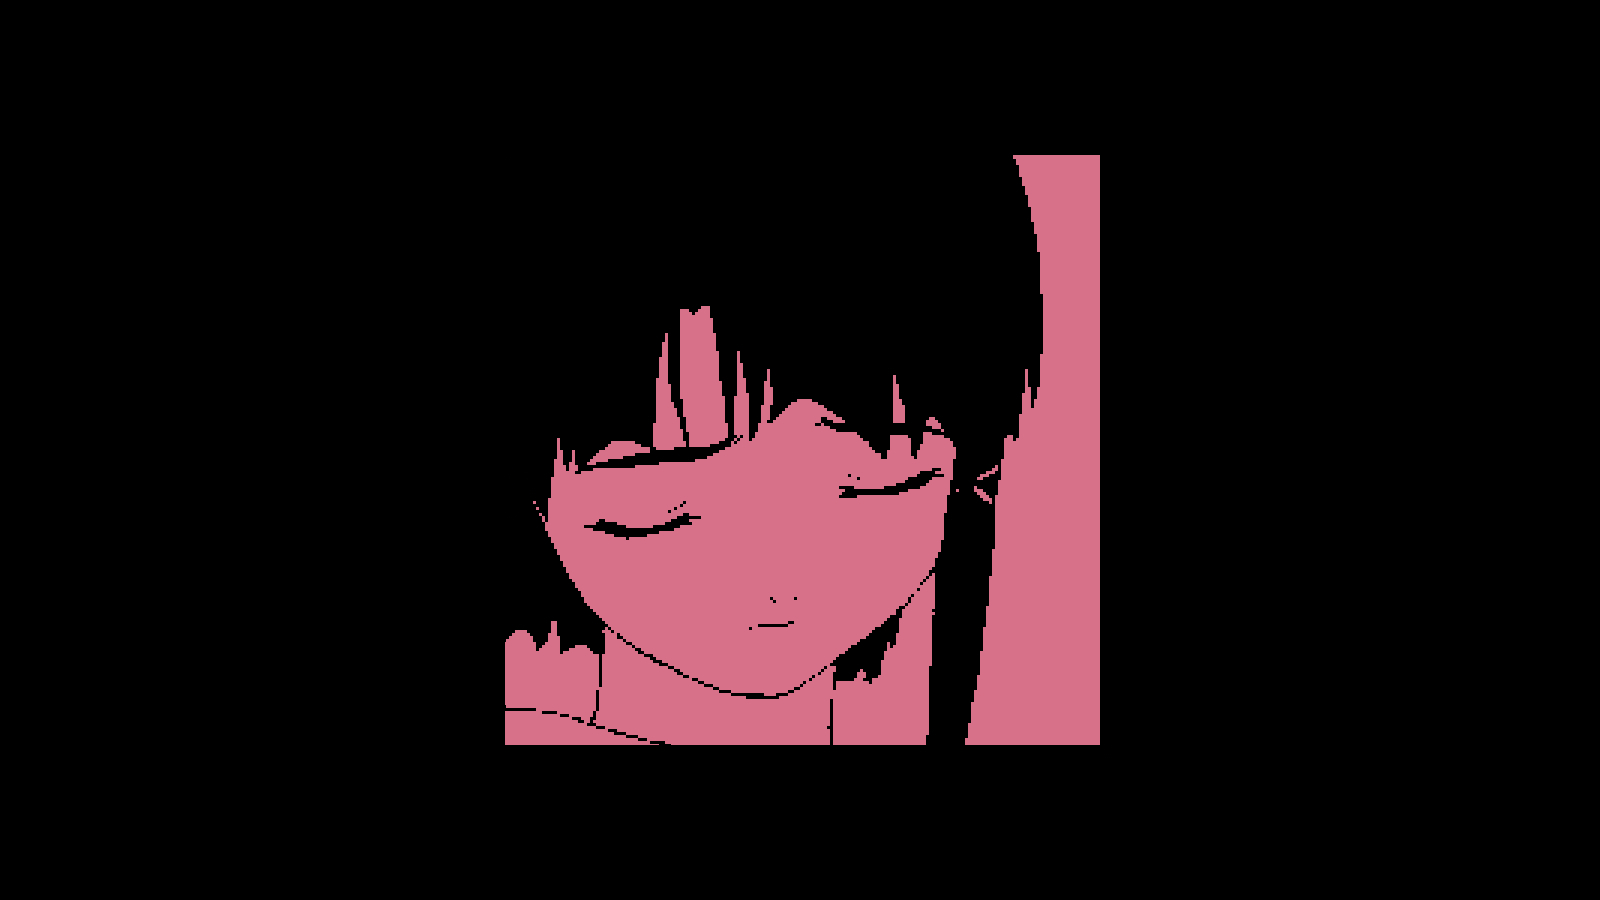 Lain Iwakura Serial Experiments Lain Black Background Closed Eyes Pink 1600x900